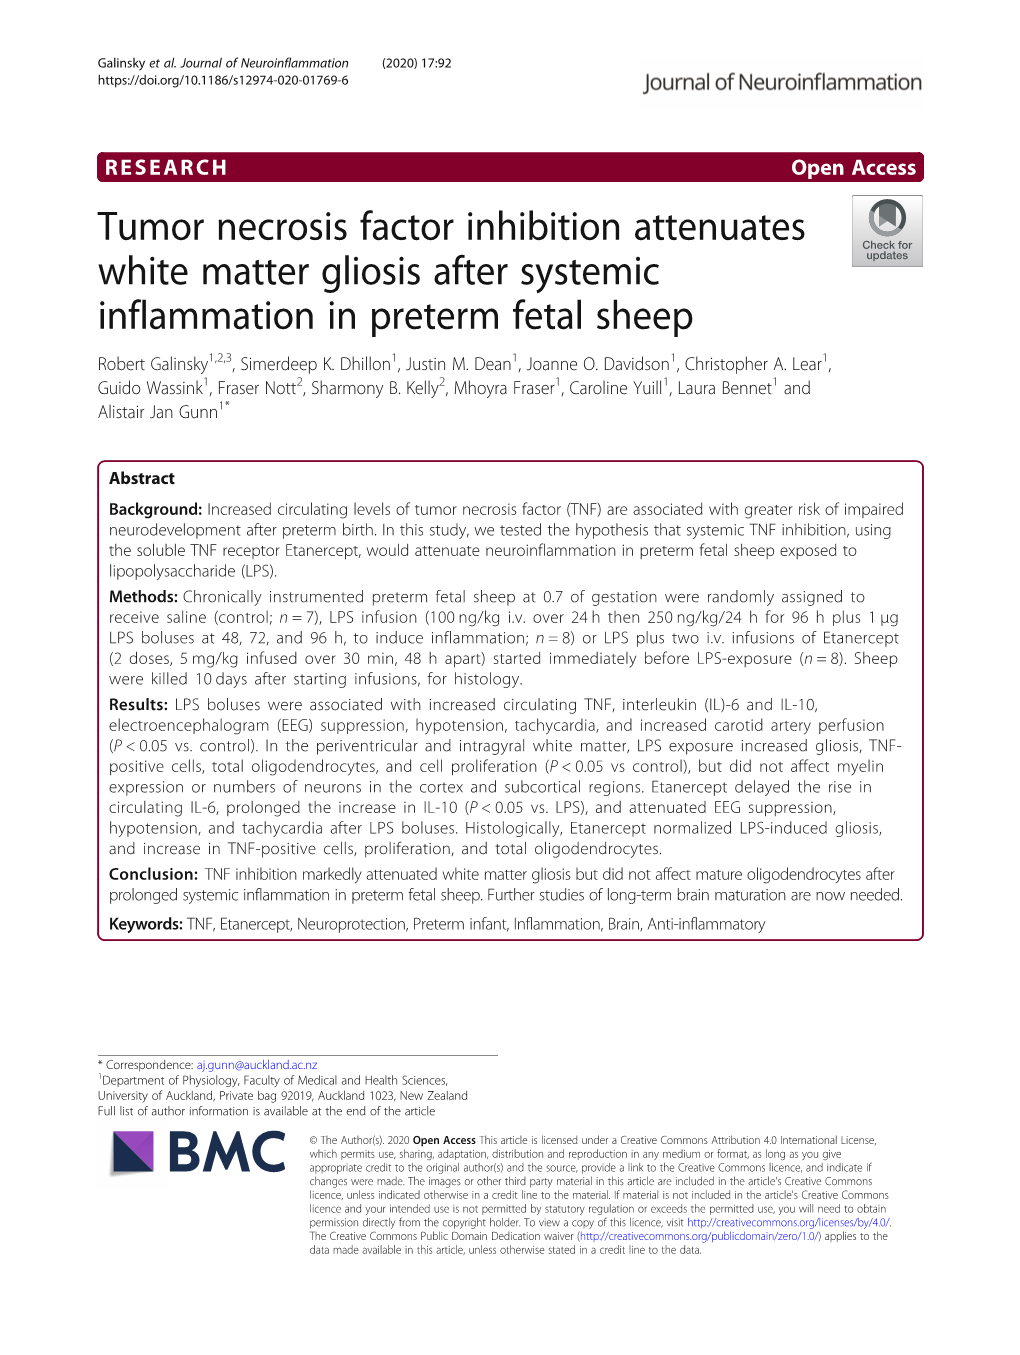 Tumor Necrosis Factor Inhibition Attenuates White Matter Gliosis After Systemic Inflammation in Preterm Fetal Sheep Robert Galinsky1,2,3, Simerdeep K